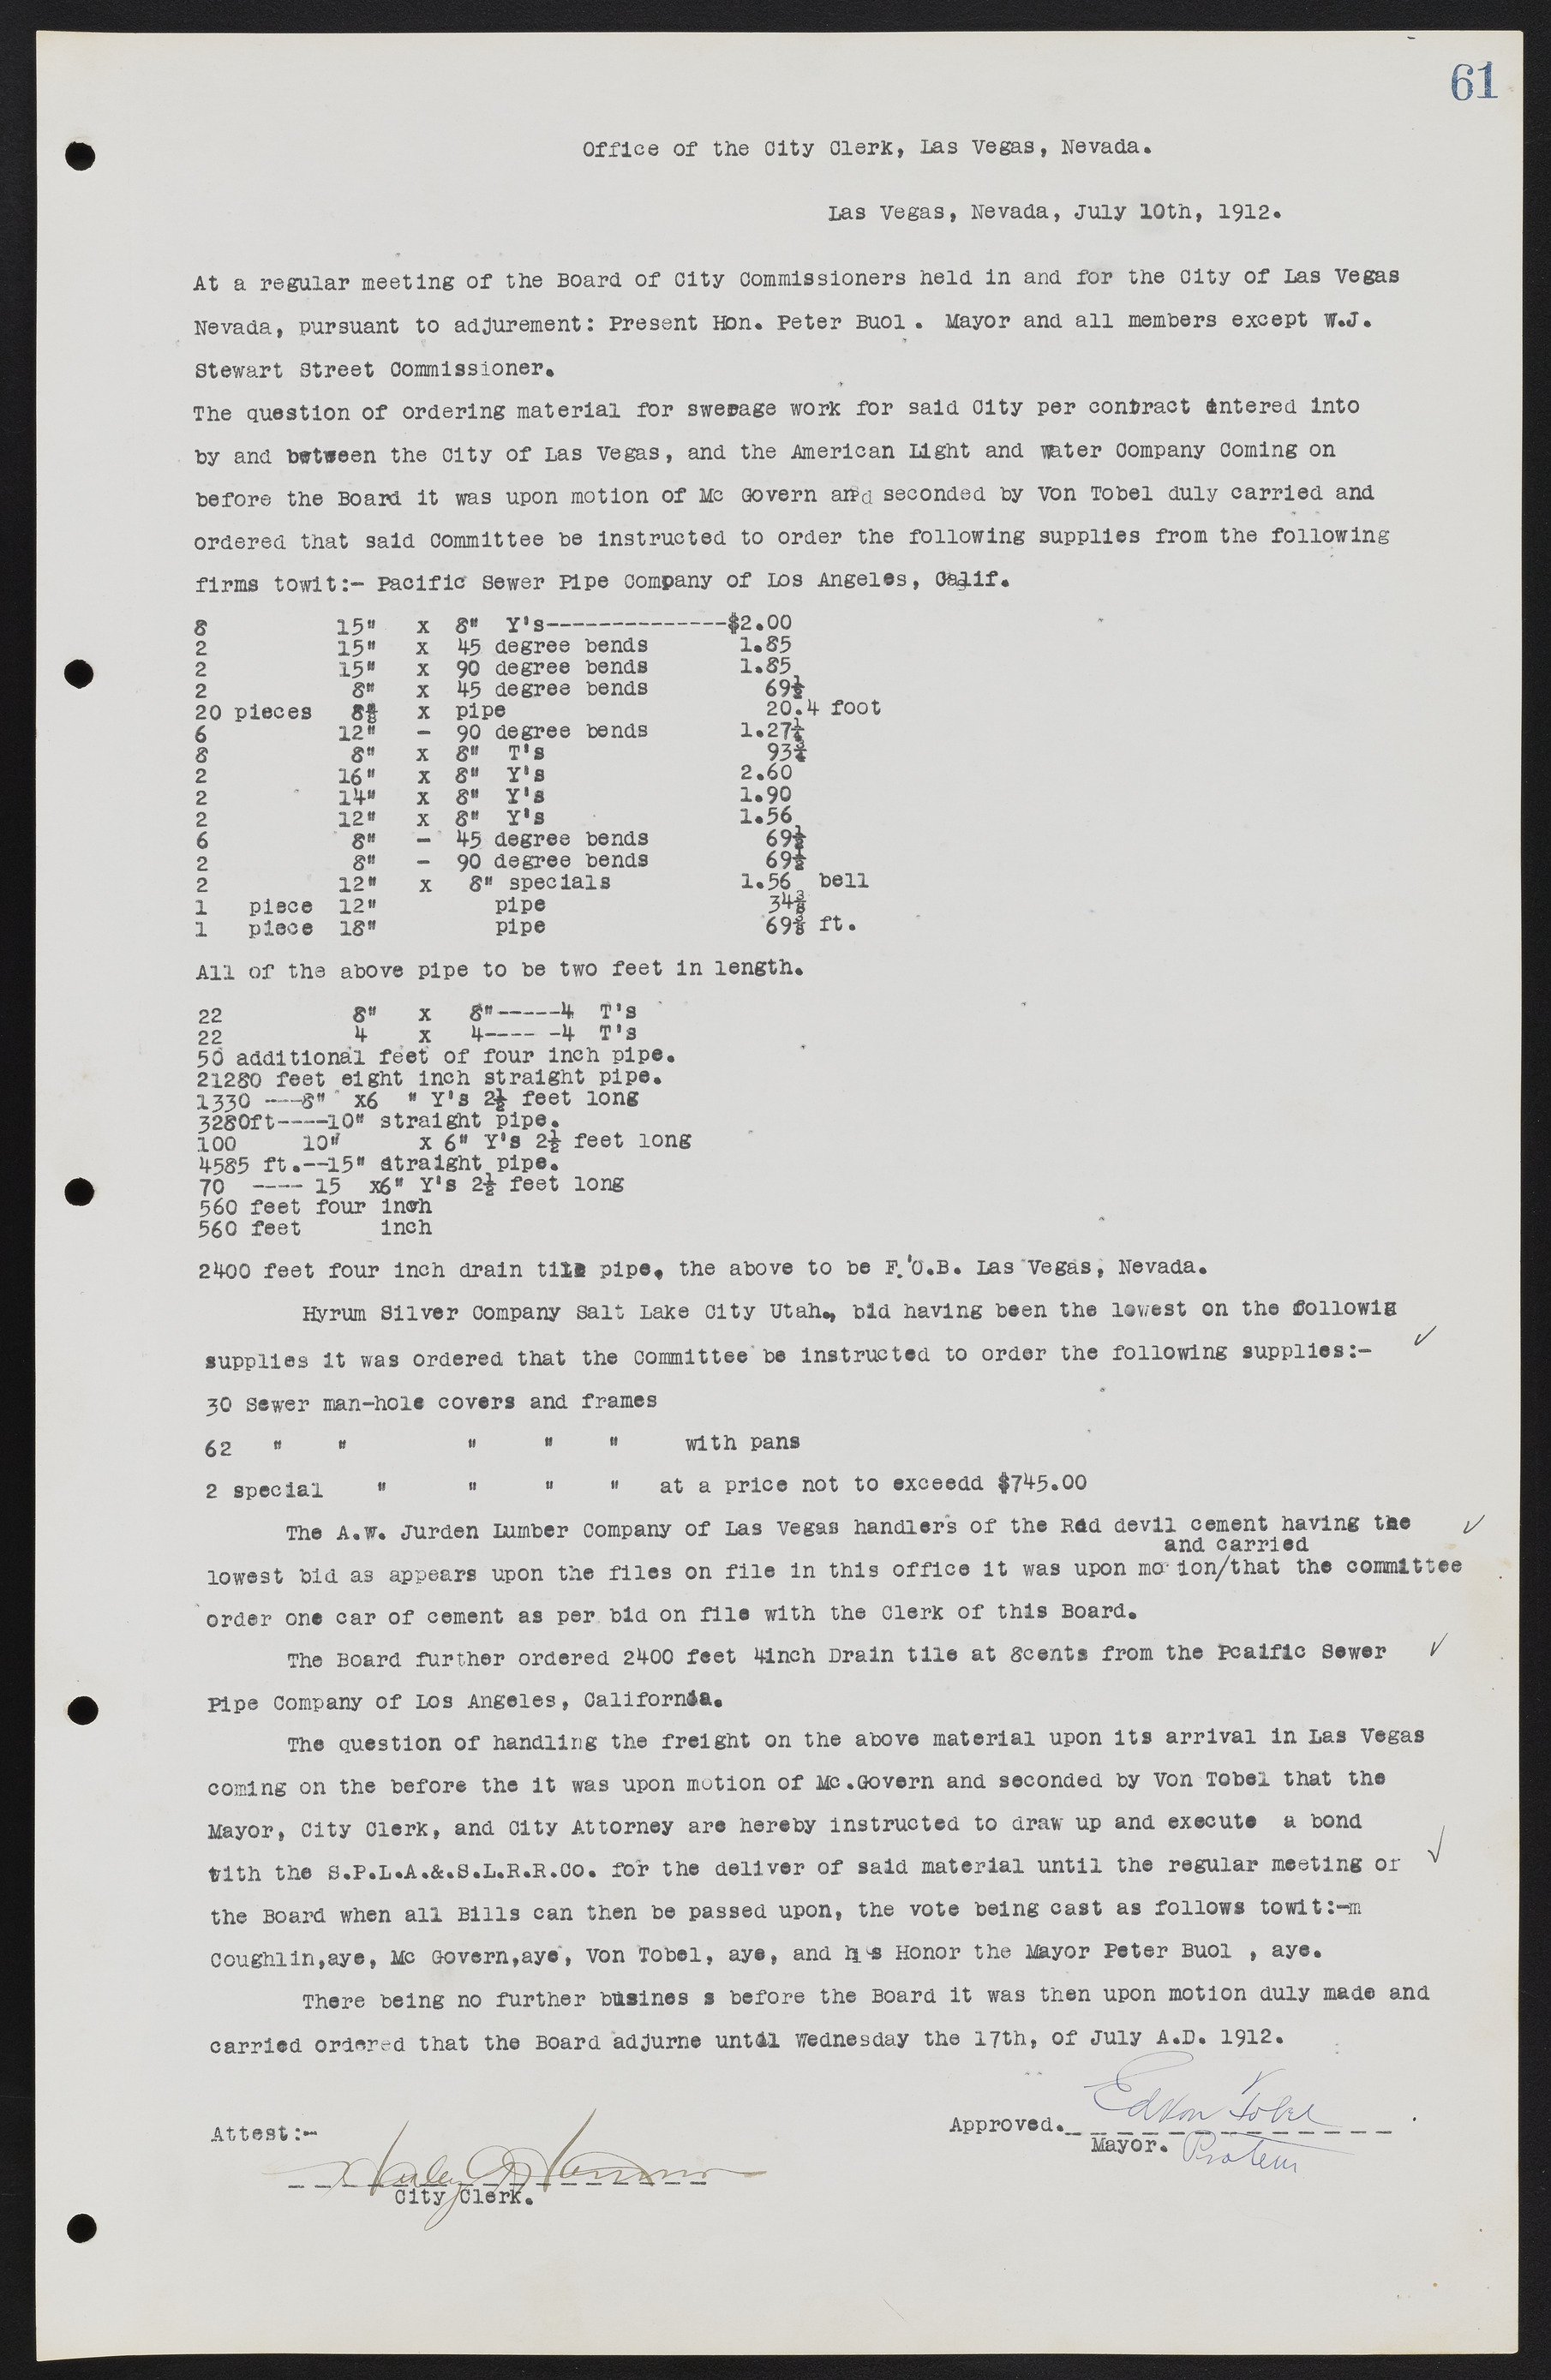 Las Vegas City Commission Minutes, June 22, 1911 to February 7, 1922, lvc000001-75